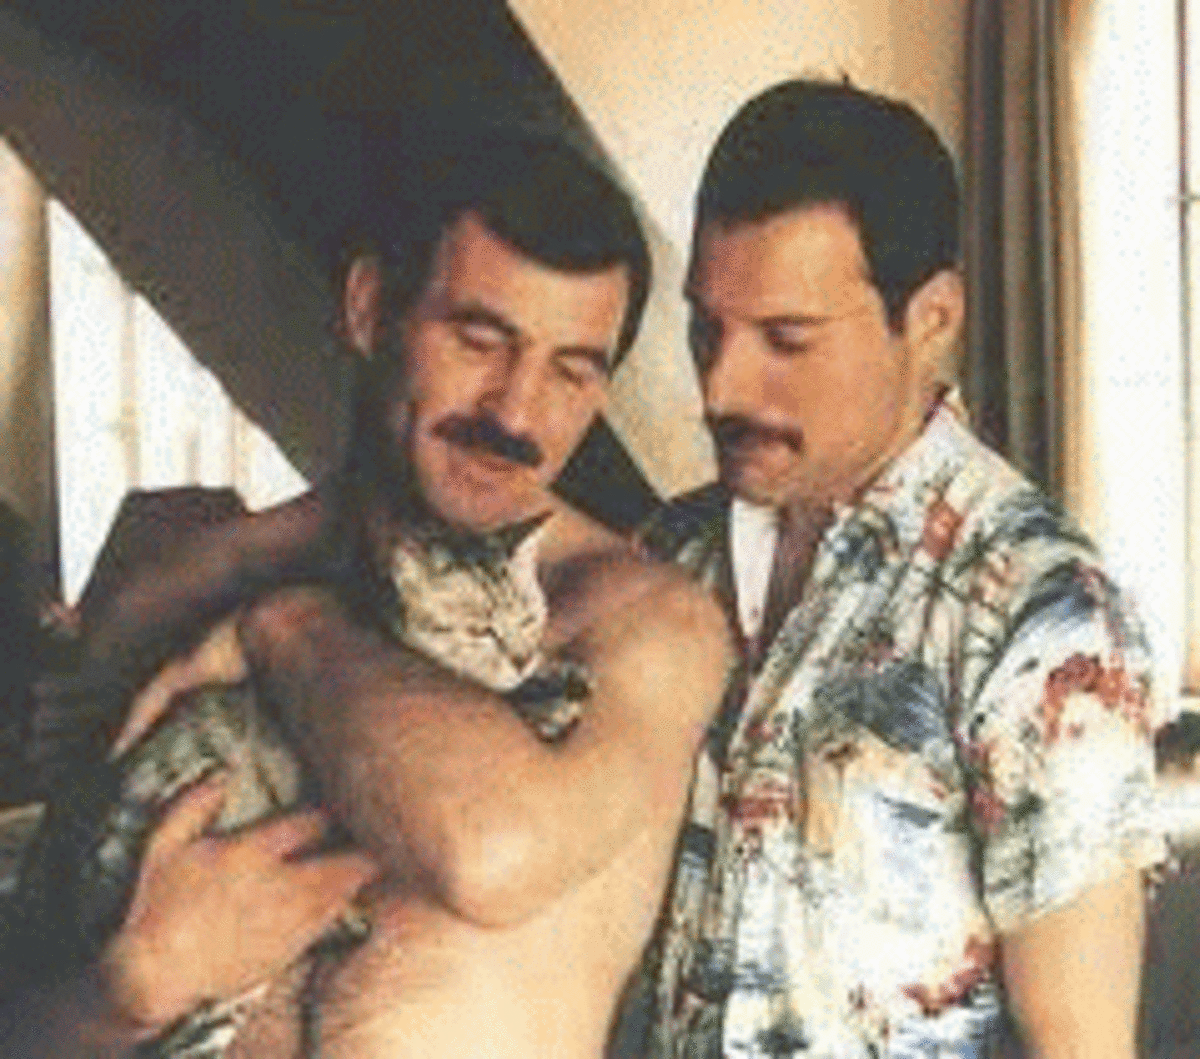 Freddie Mercury with his last partner Jim Hutton